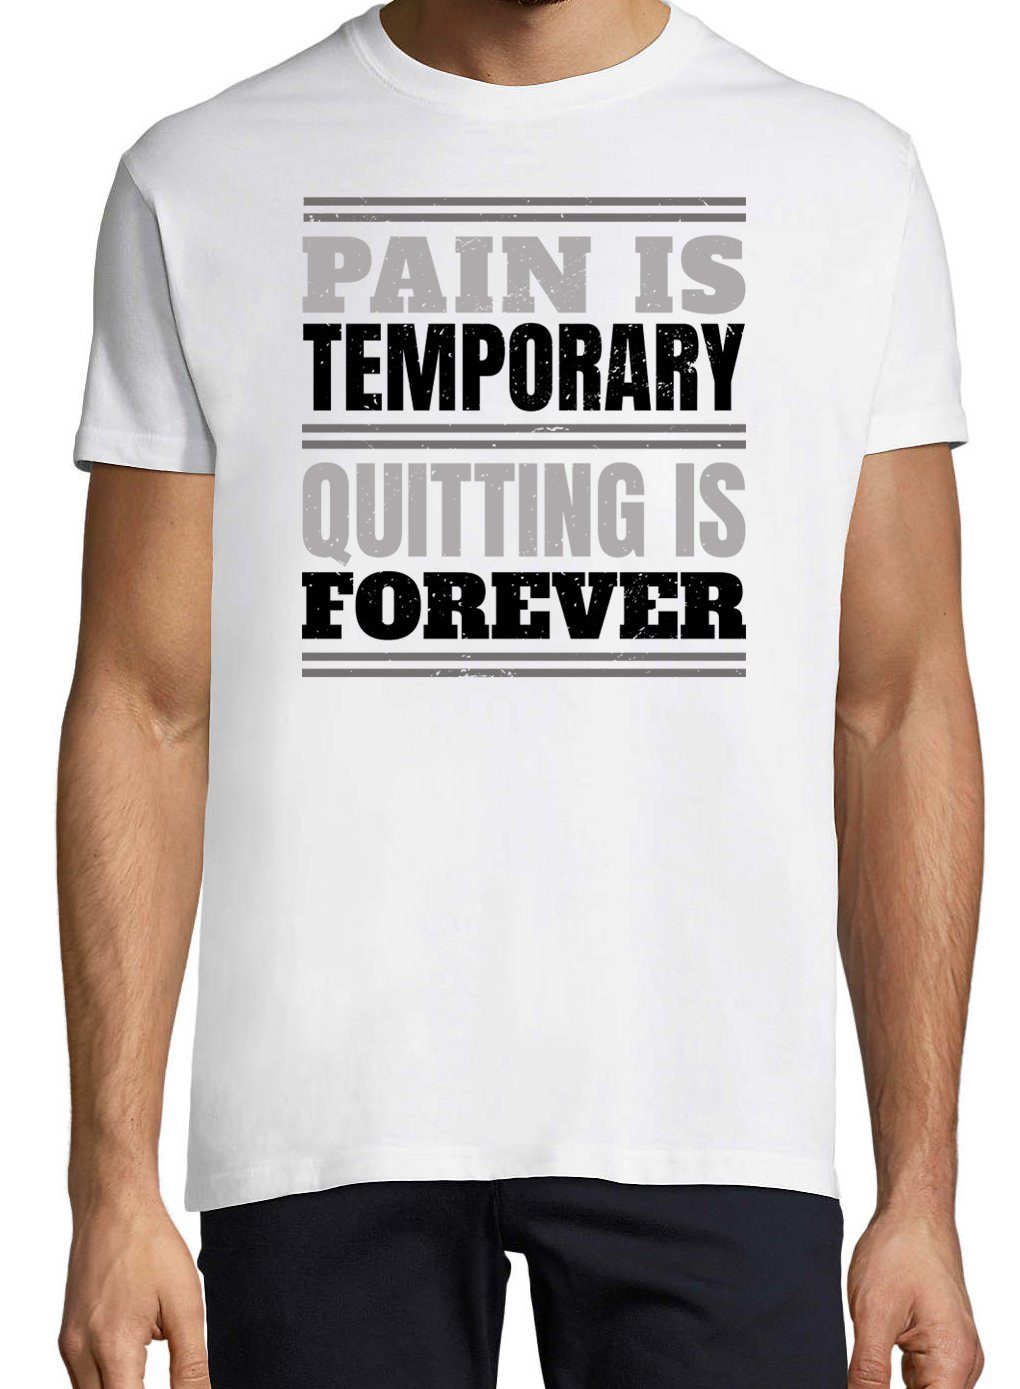 IS IS Trendigem mit FOREVER! TEMPORARY, Youth Herren T-Shirt Designz Frontdruck QUITTING Weiss PAIN Shirt